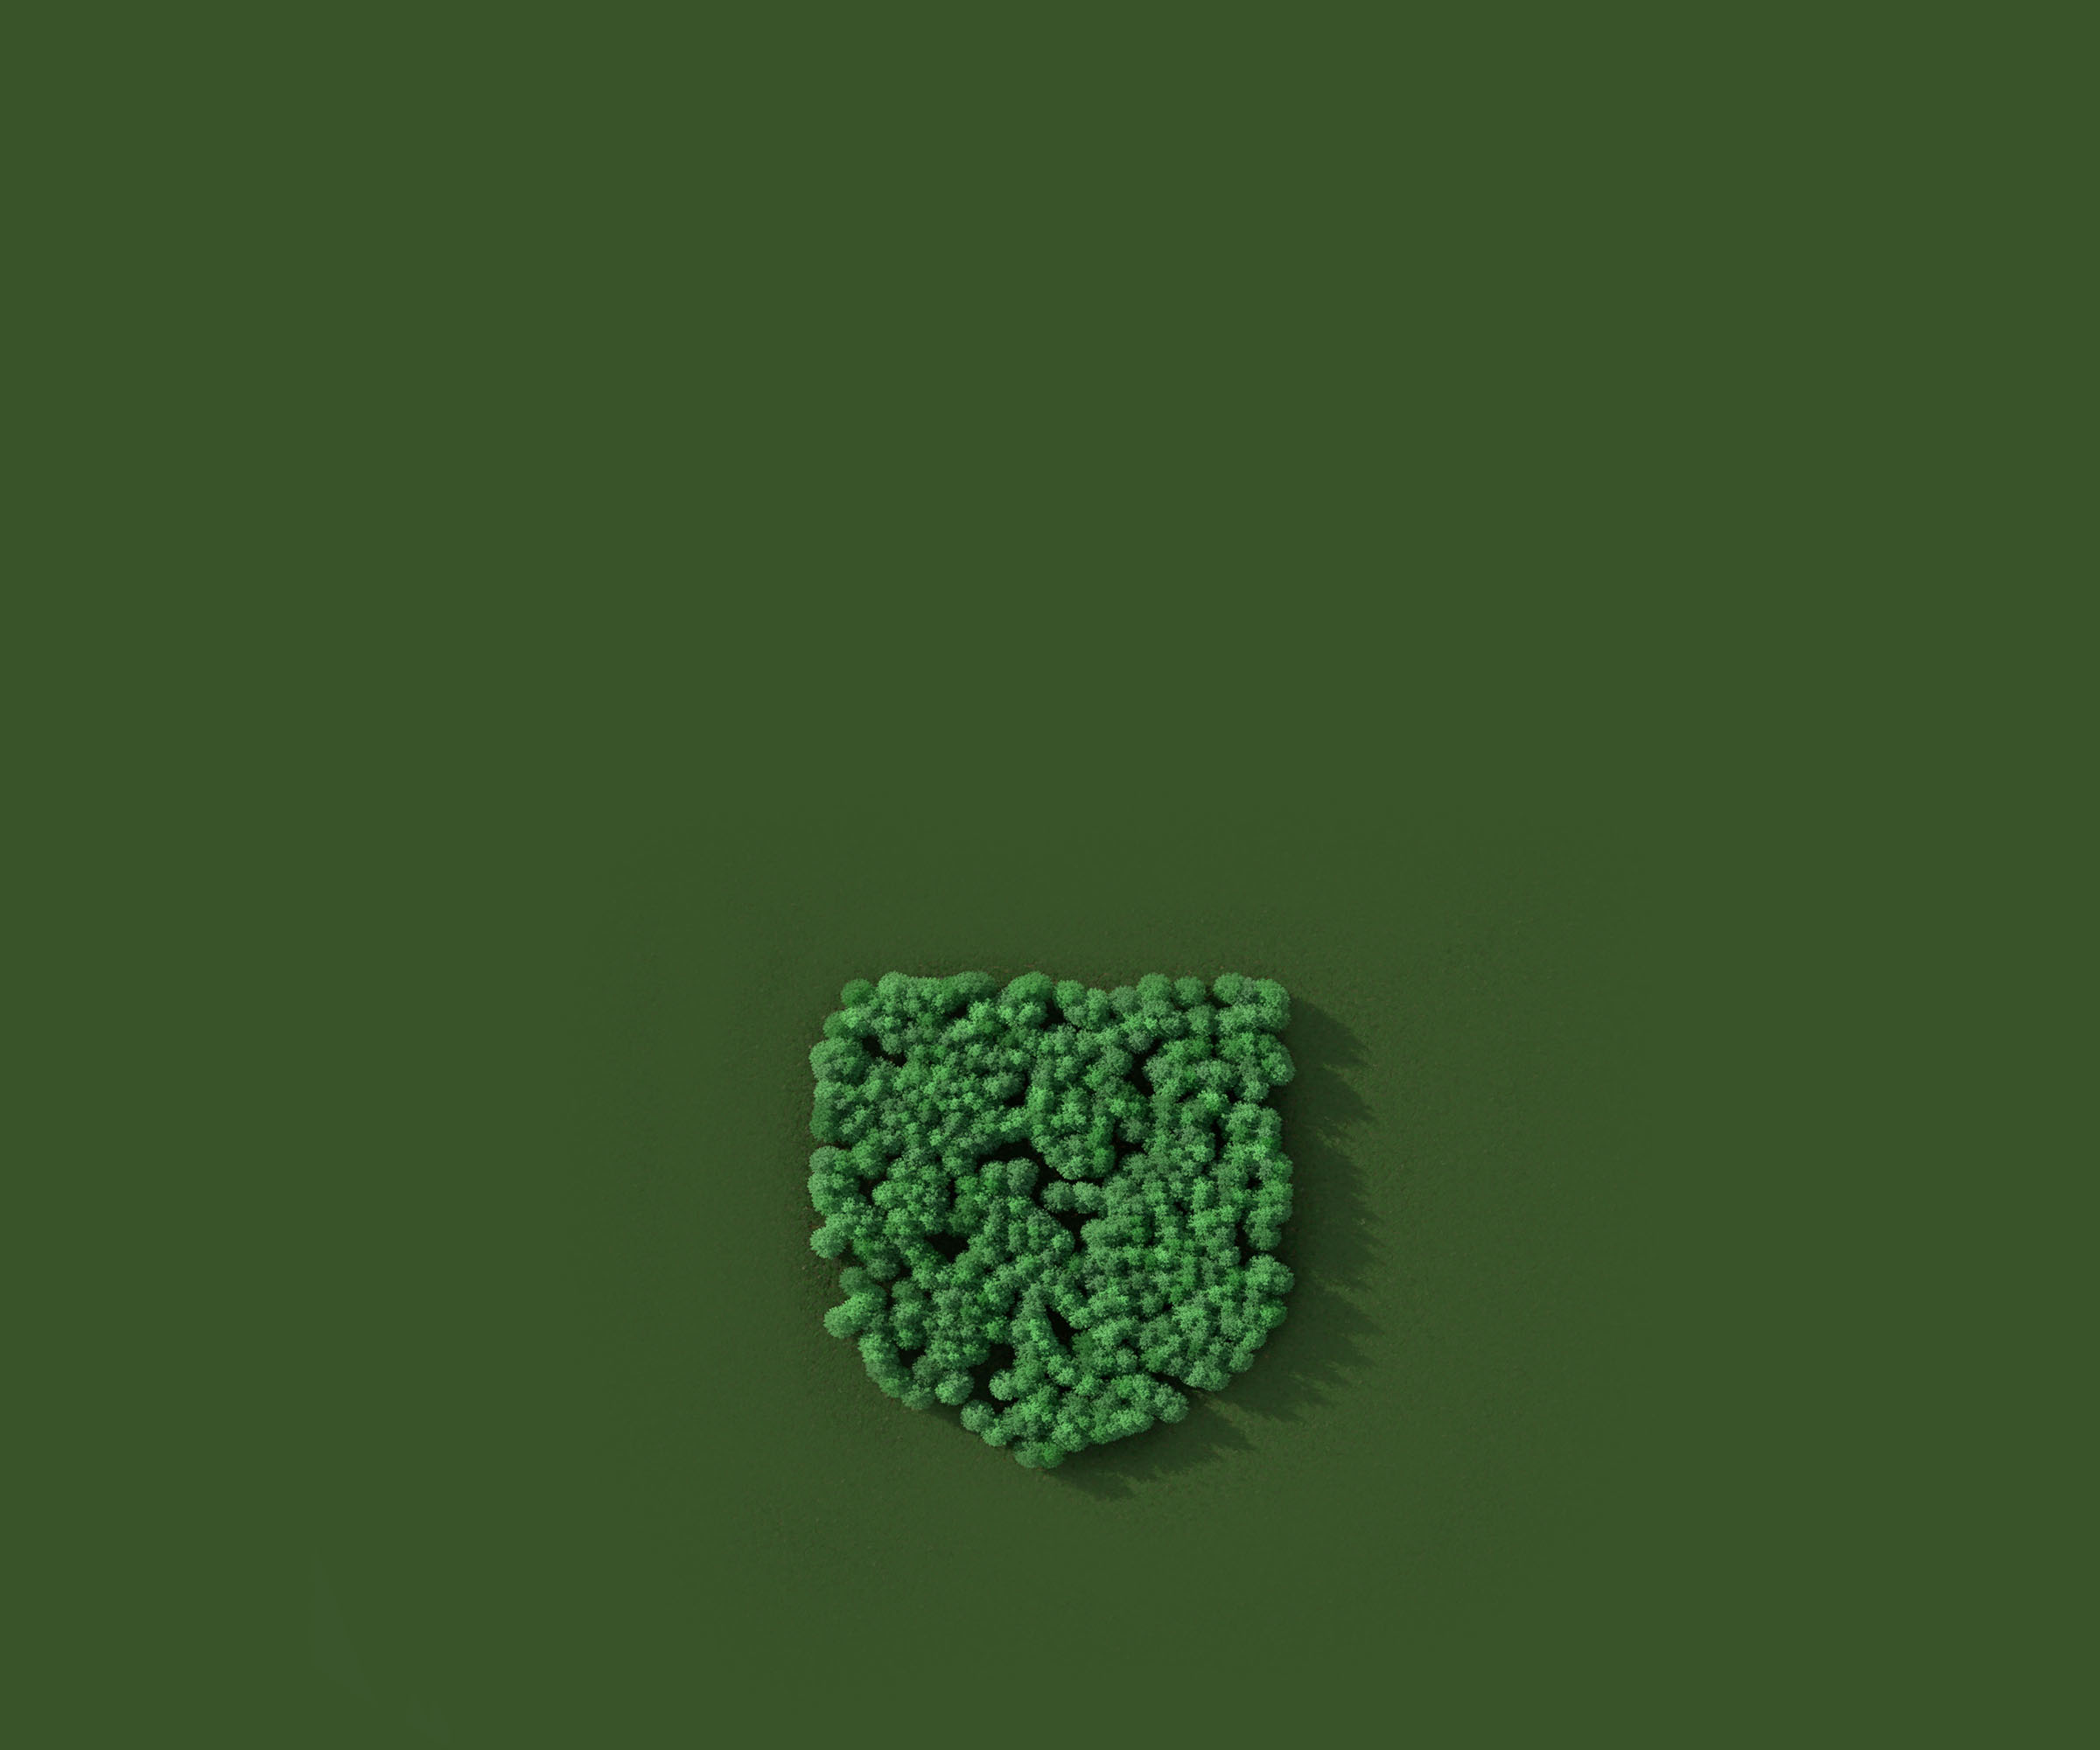 Green Cambridge shield made of trees